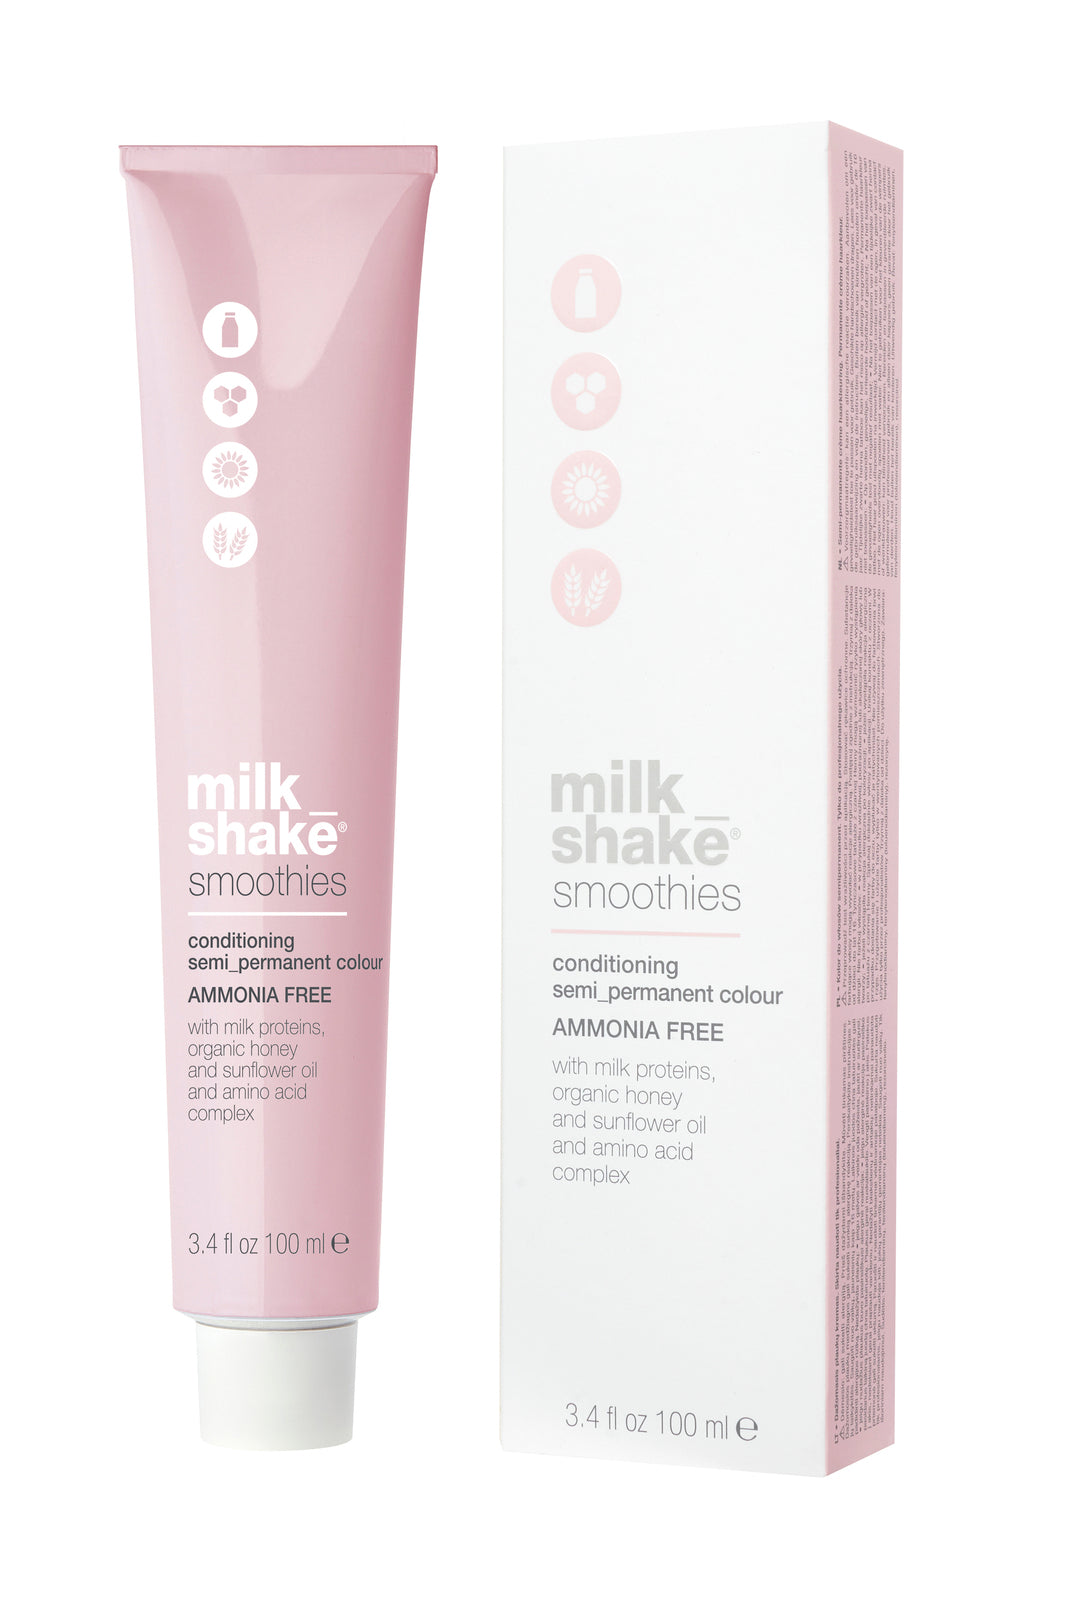 Milkshake smoothies semi-permanent color 5